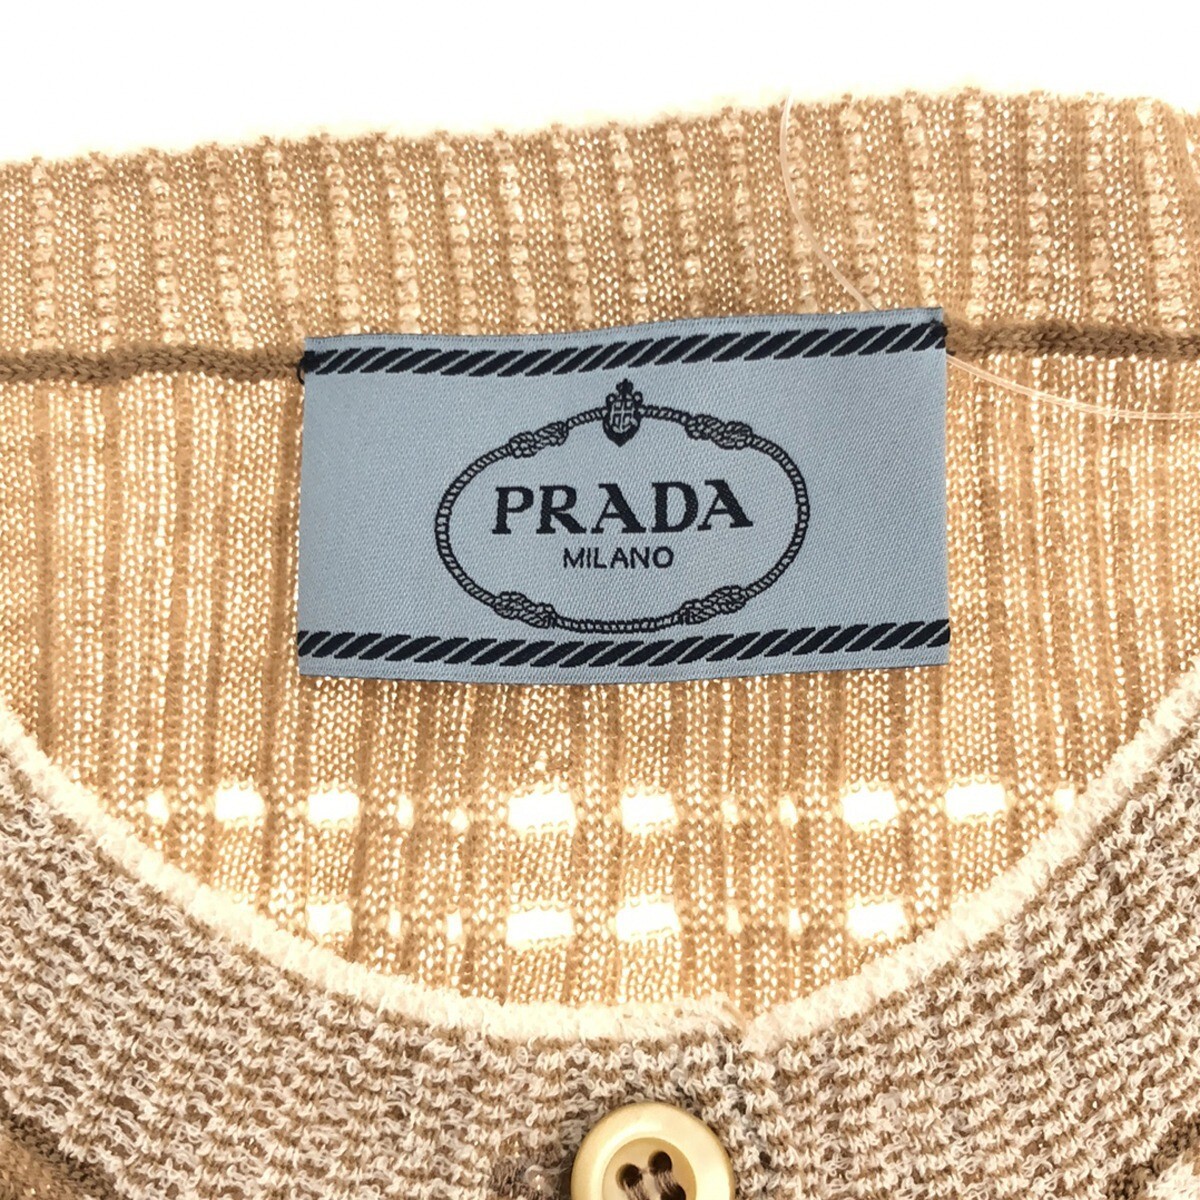 PRADA Prada rib knitted border cardigan beige group 38 ITSXU4D78GBW